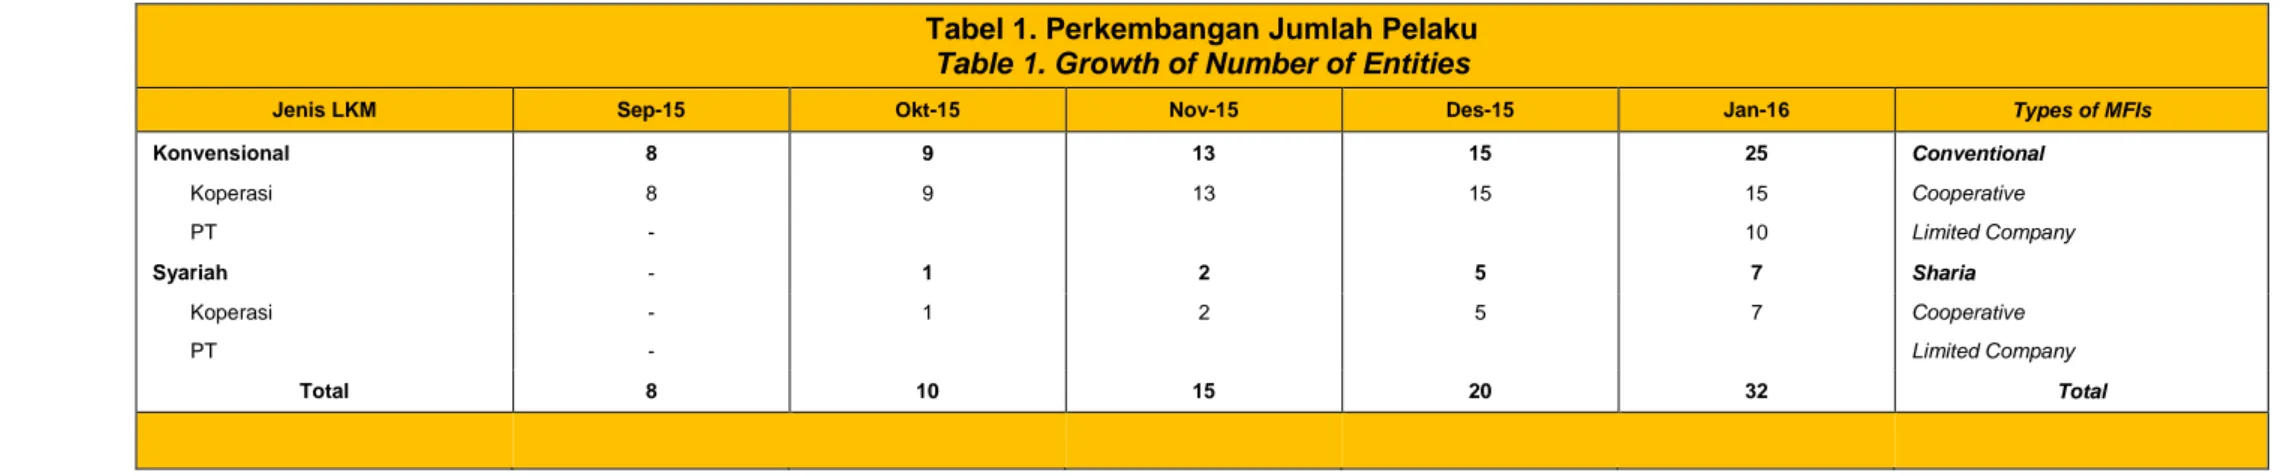 Tabel 2. Jumlah LKM Berdasarkan Provinsi  Table 2. Number of MFIs Based on Province 